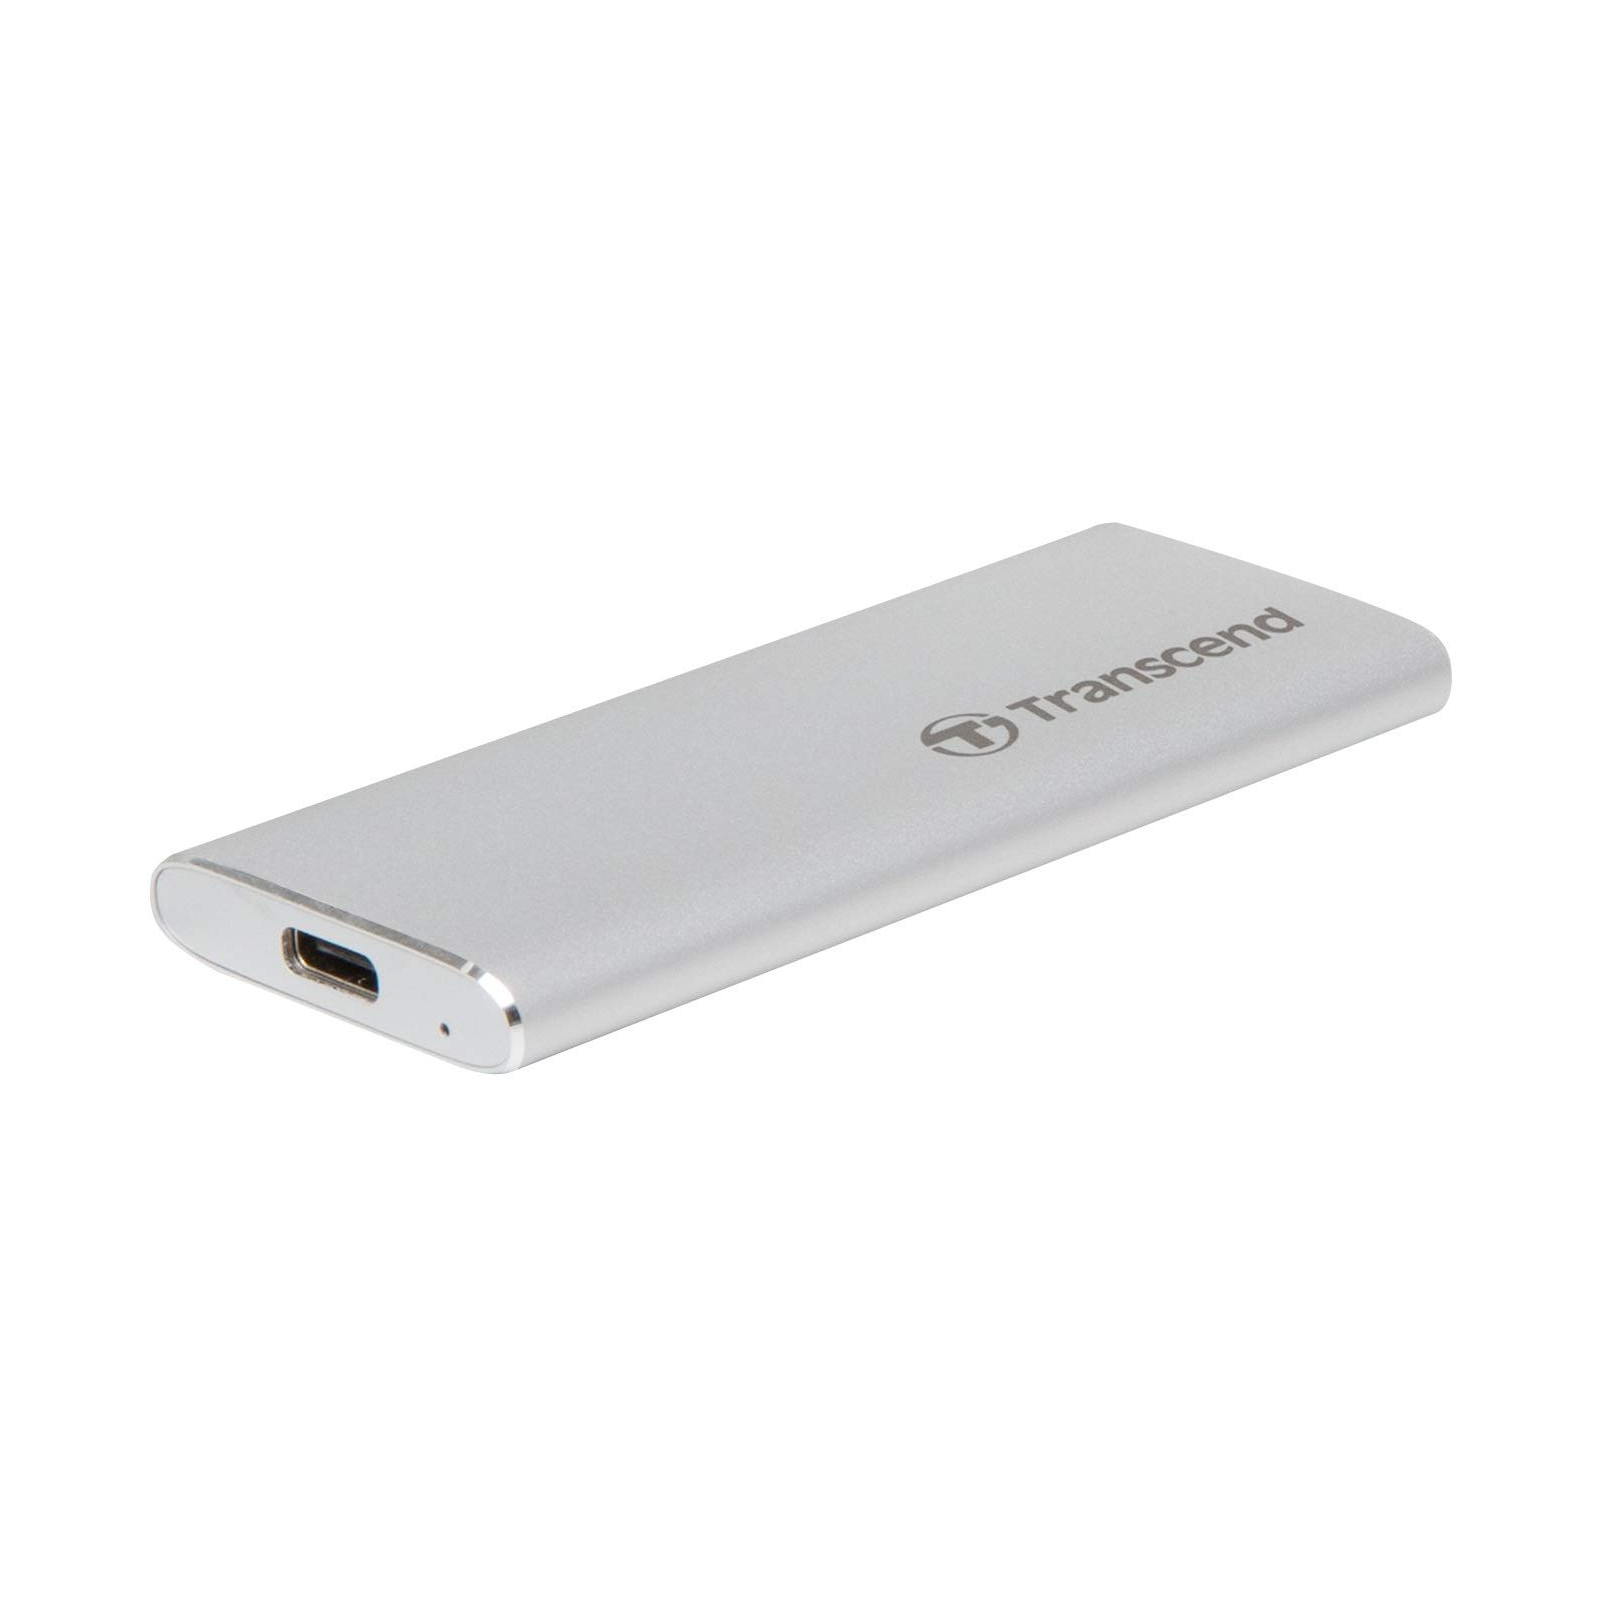 Накопитель SSD USB 3.1 120GB Transcend (TS120GESD240C)